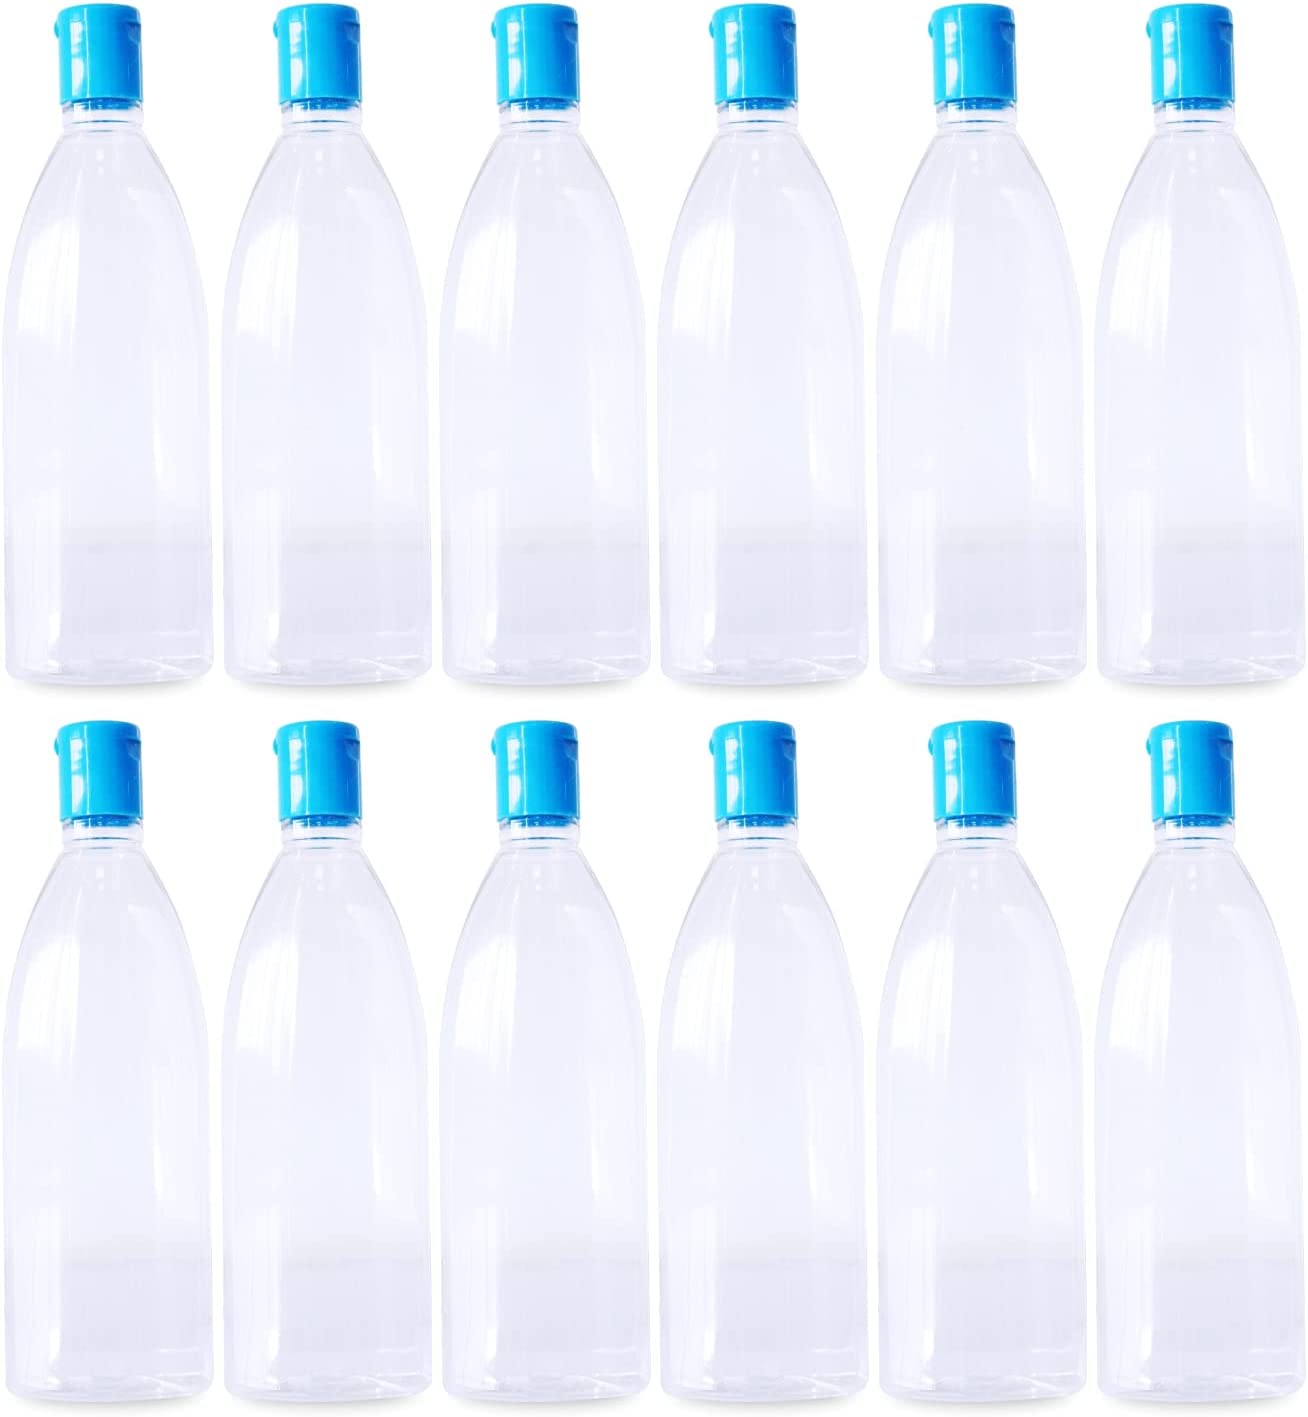 Wholesale Clear Plastic Squeeze Plastic Squeeze Bottles With Flip